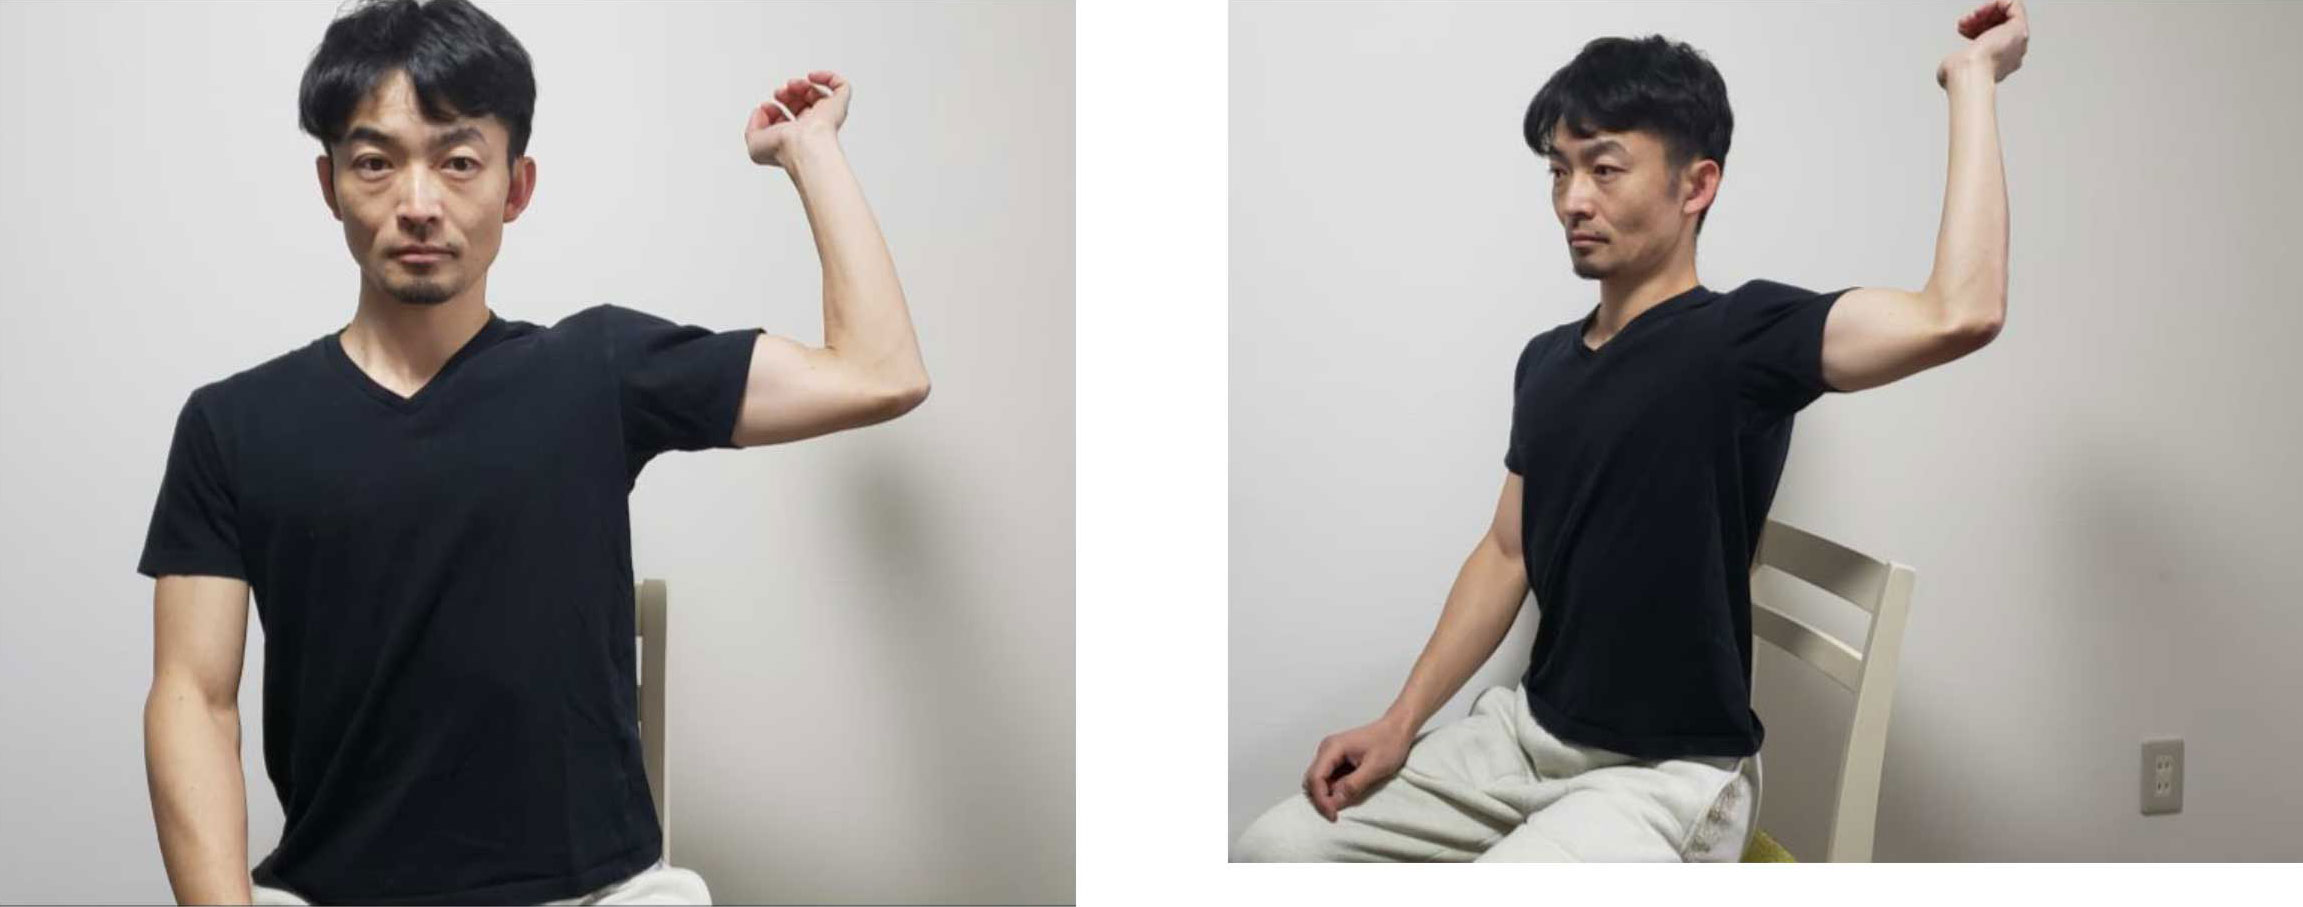 反復性肩関節脱臼 | スポーツ医学科の主な疾患と治療方法 | 江戸川病院